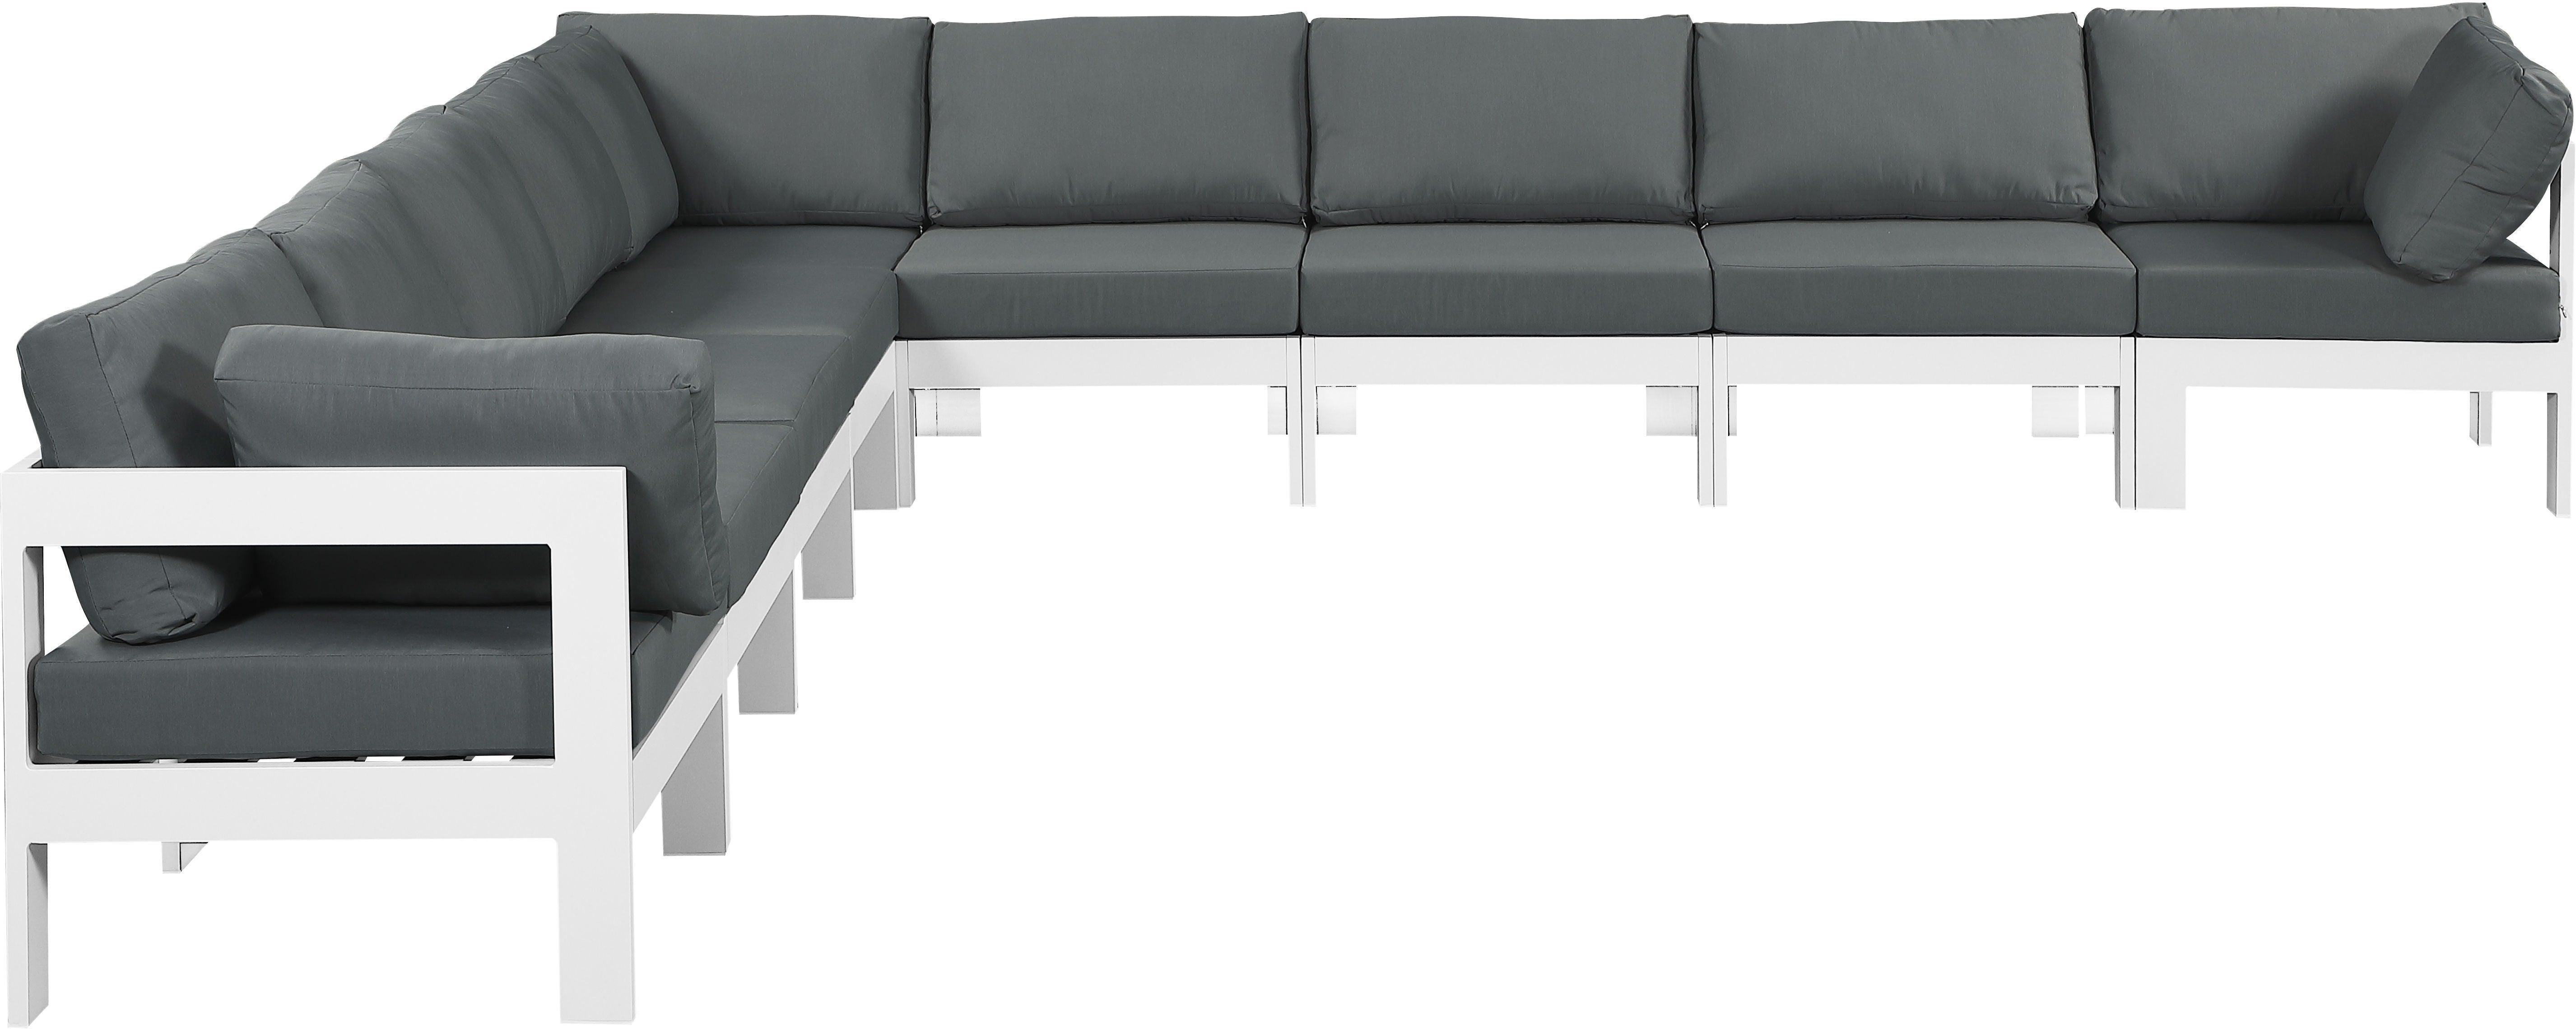 Meridian Furniture - Nizuc - Outdoor Patio Modular Sectional 9 Piece - Grey - Fabric - Modern & Contemporary - 5th Avenue Furniture